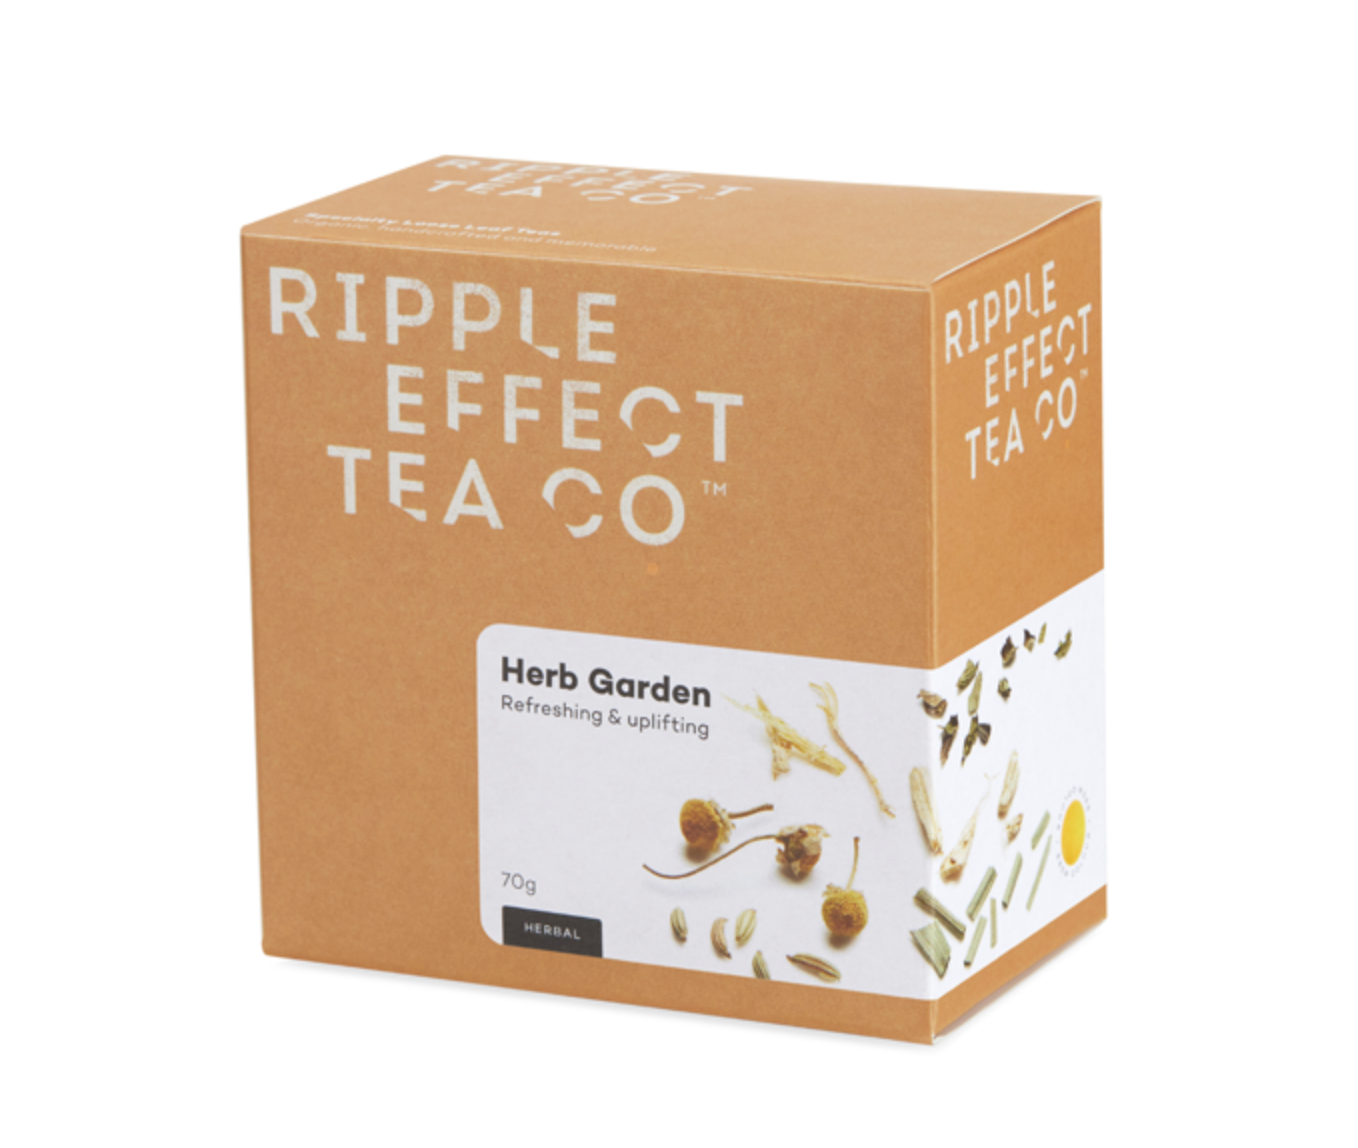 Ripple Effect Tea